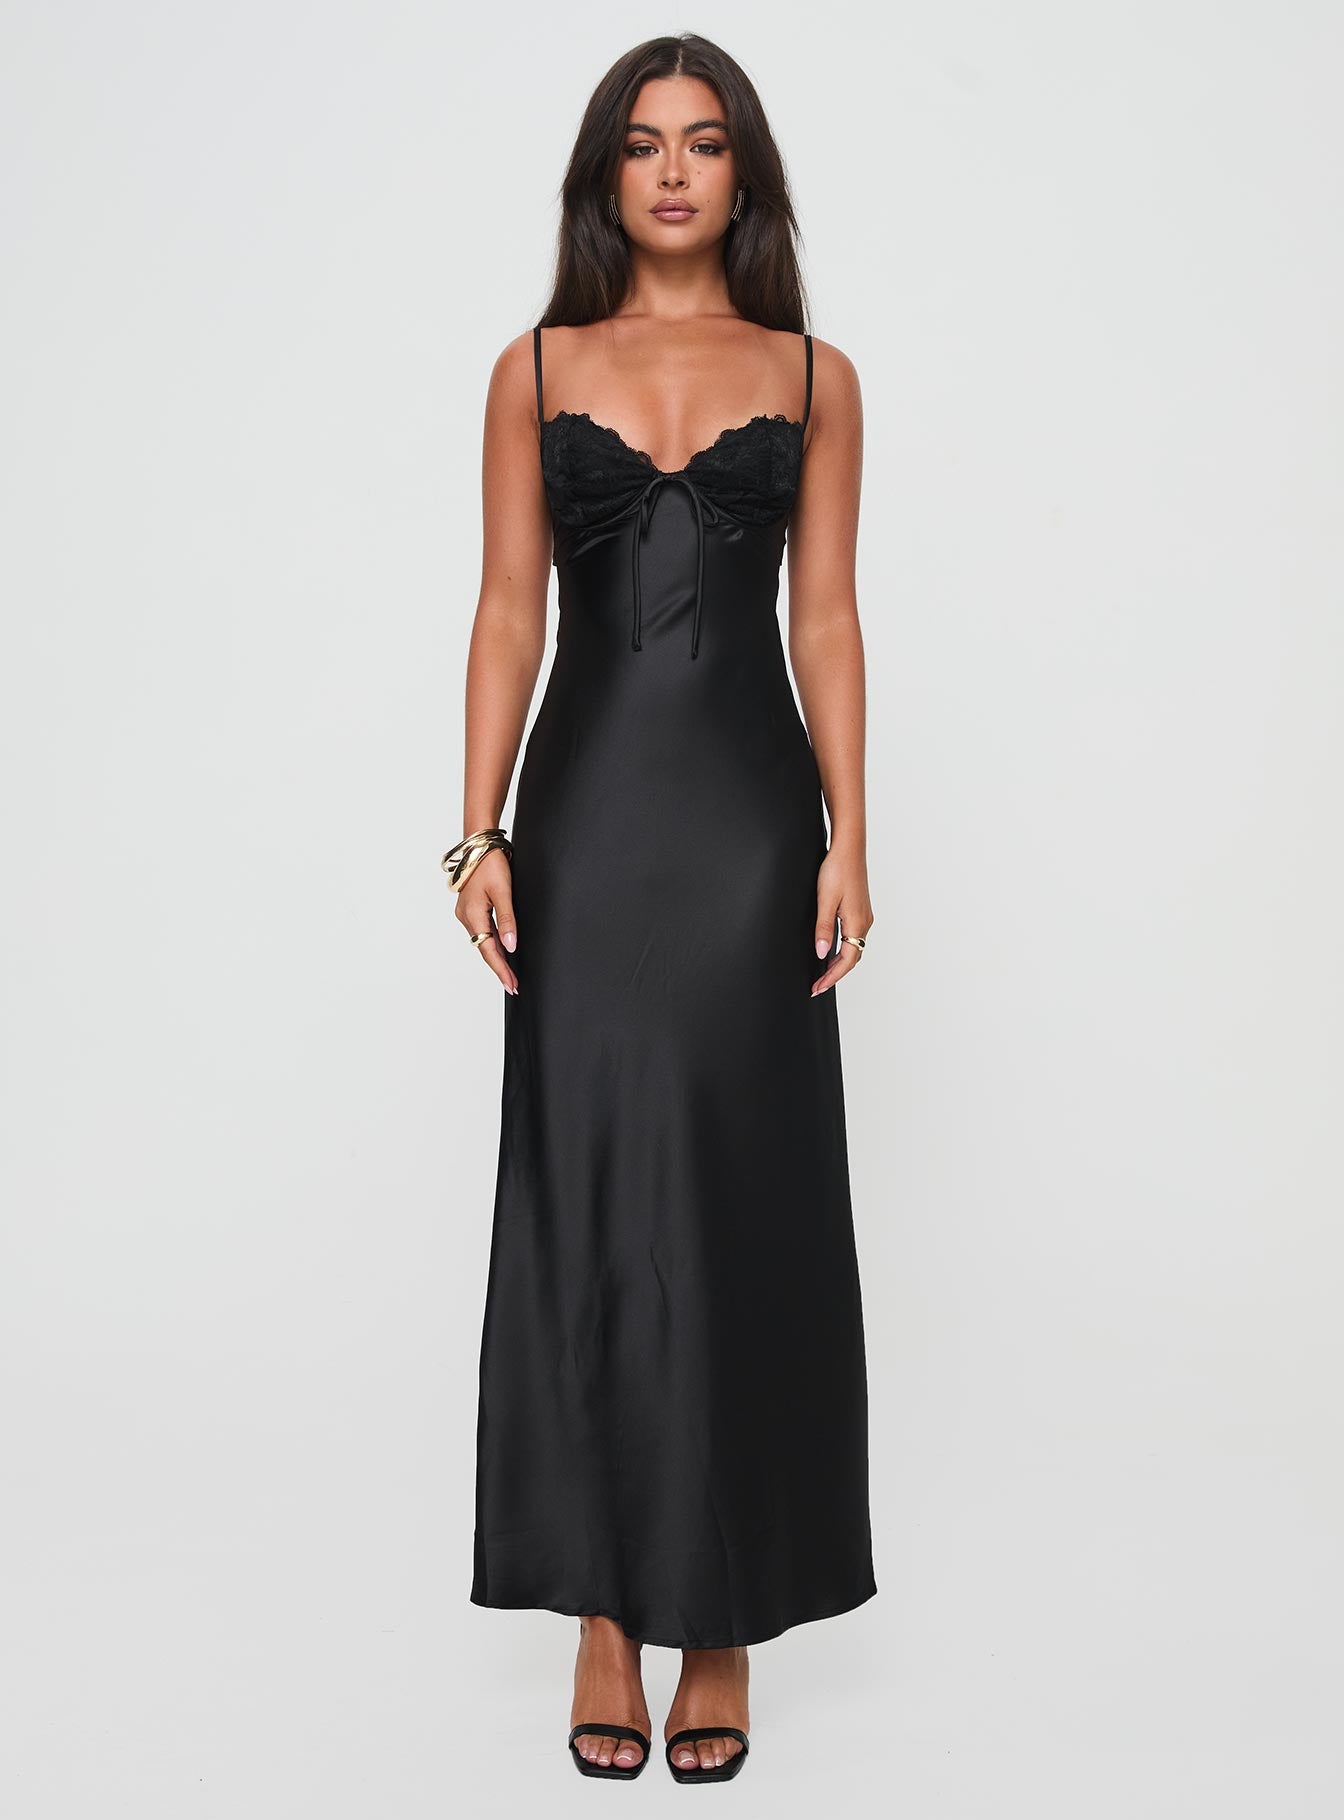 Shop Formal Dress - Fadyen Bias Cut Maxi Dress Black secondary image